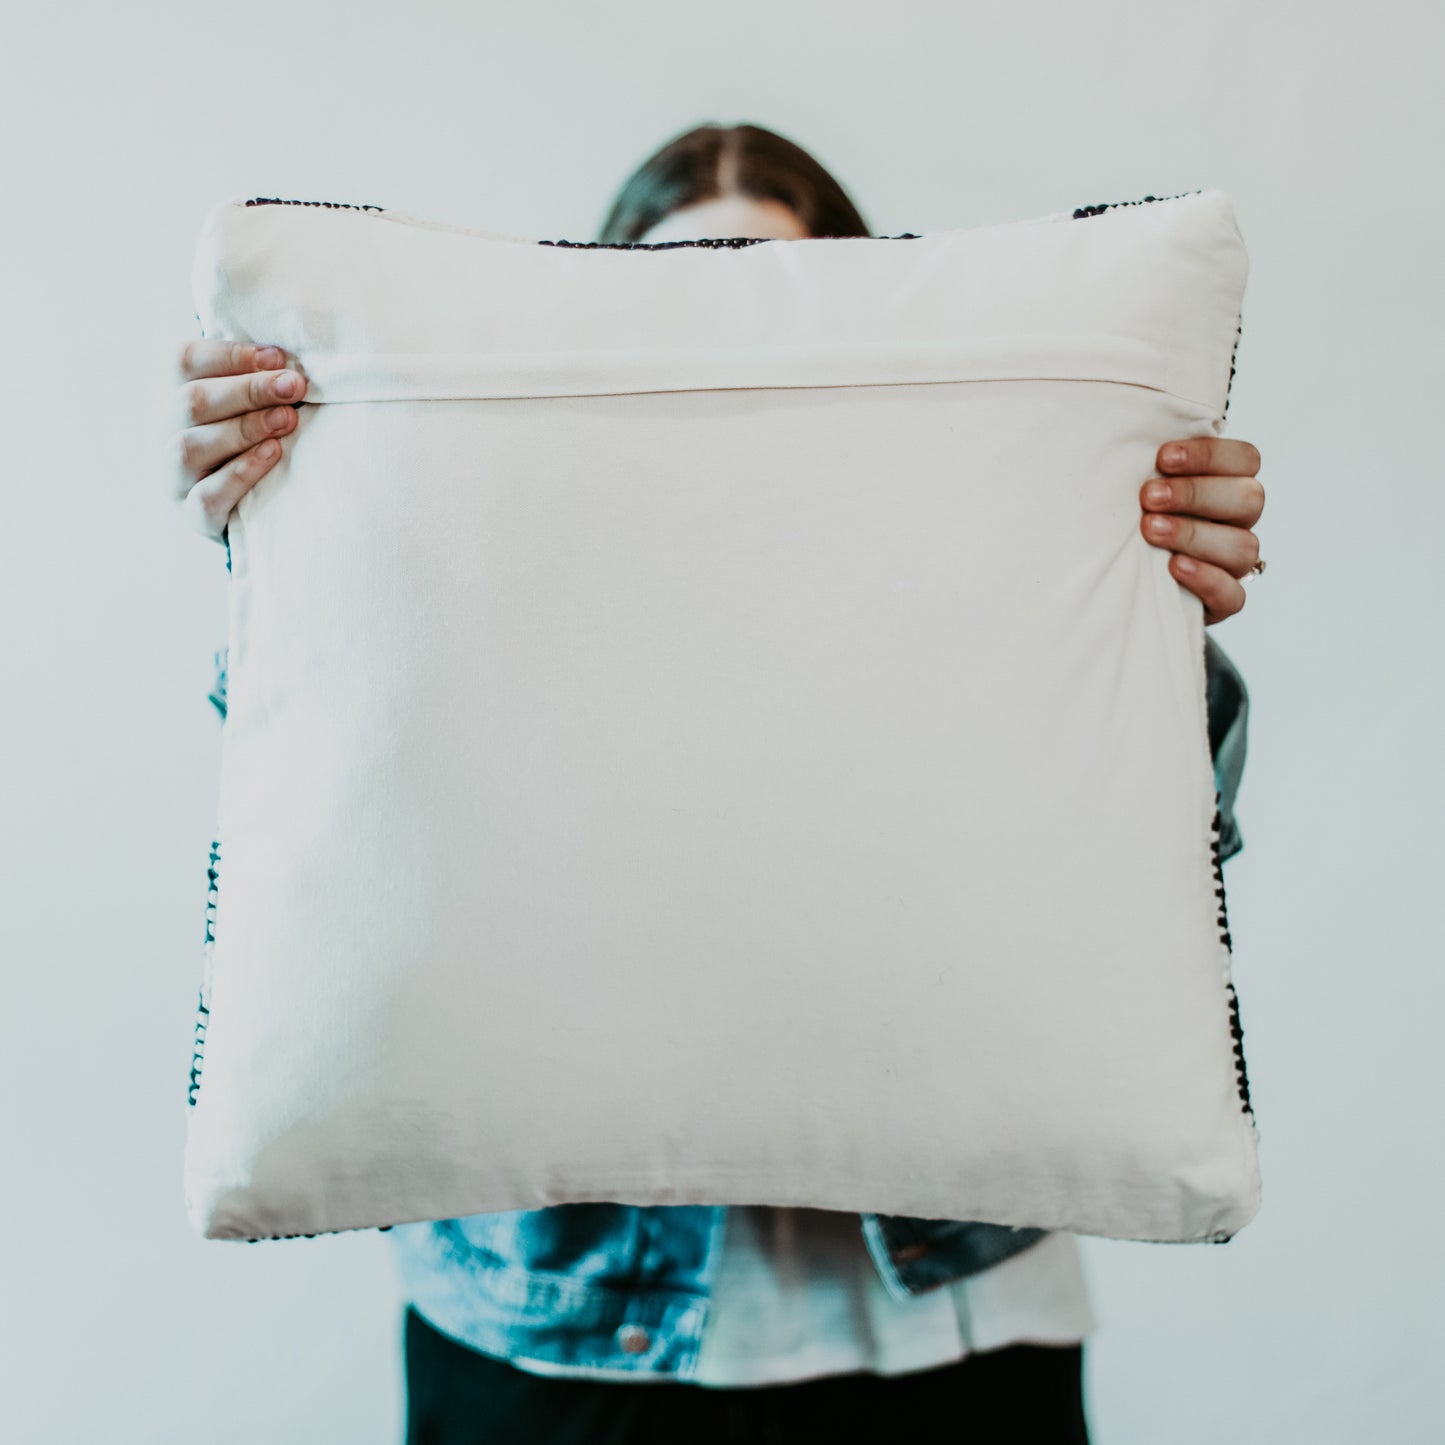 Woven Pattern Pillow